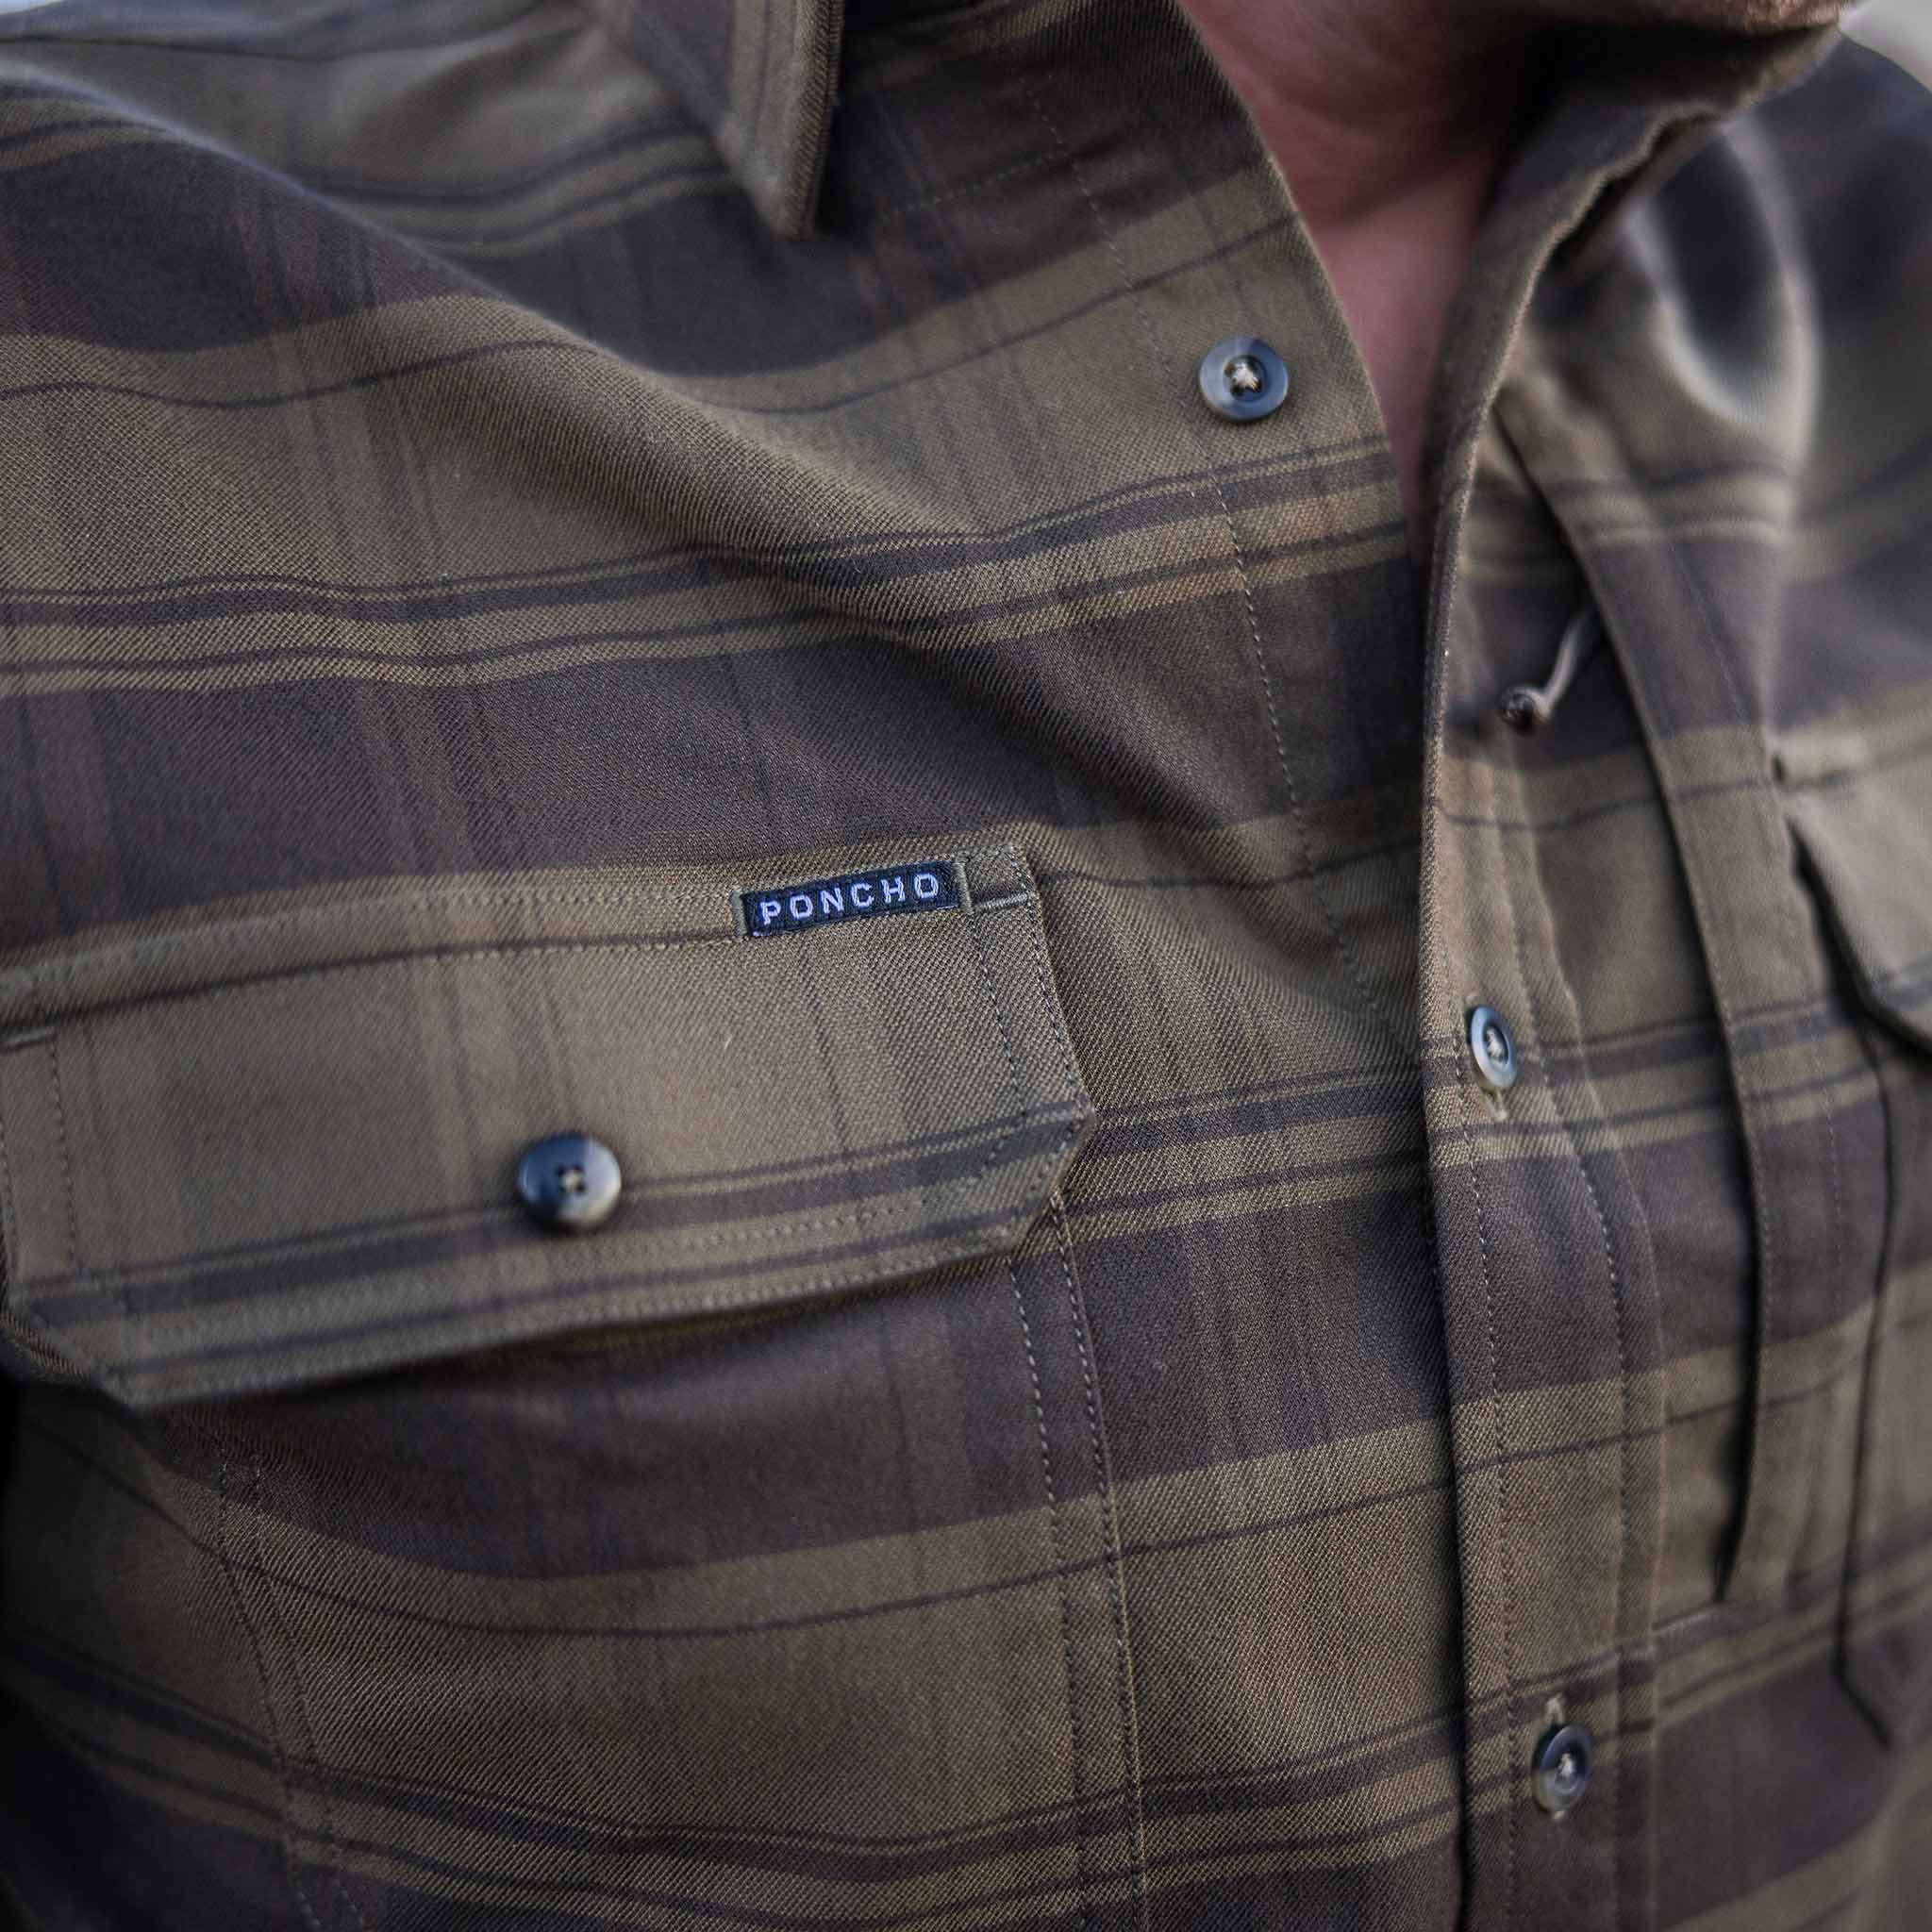 closeup of chest pocket flannel shirt